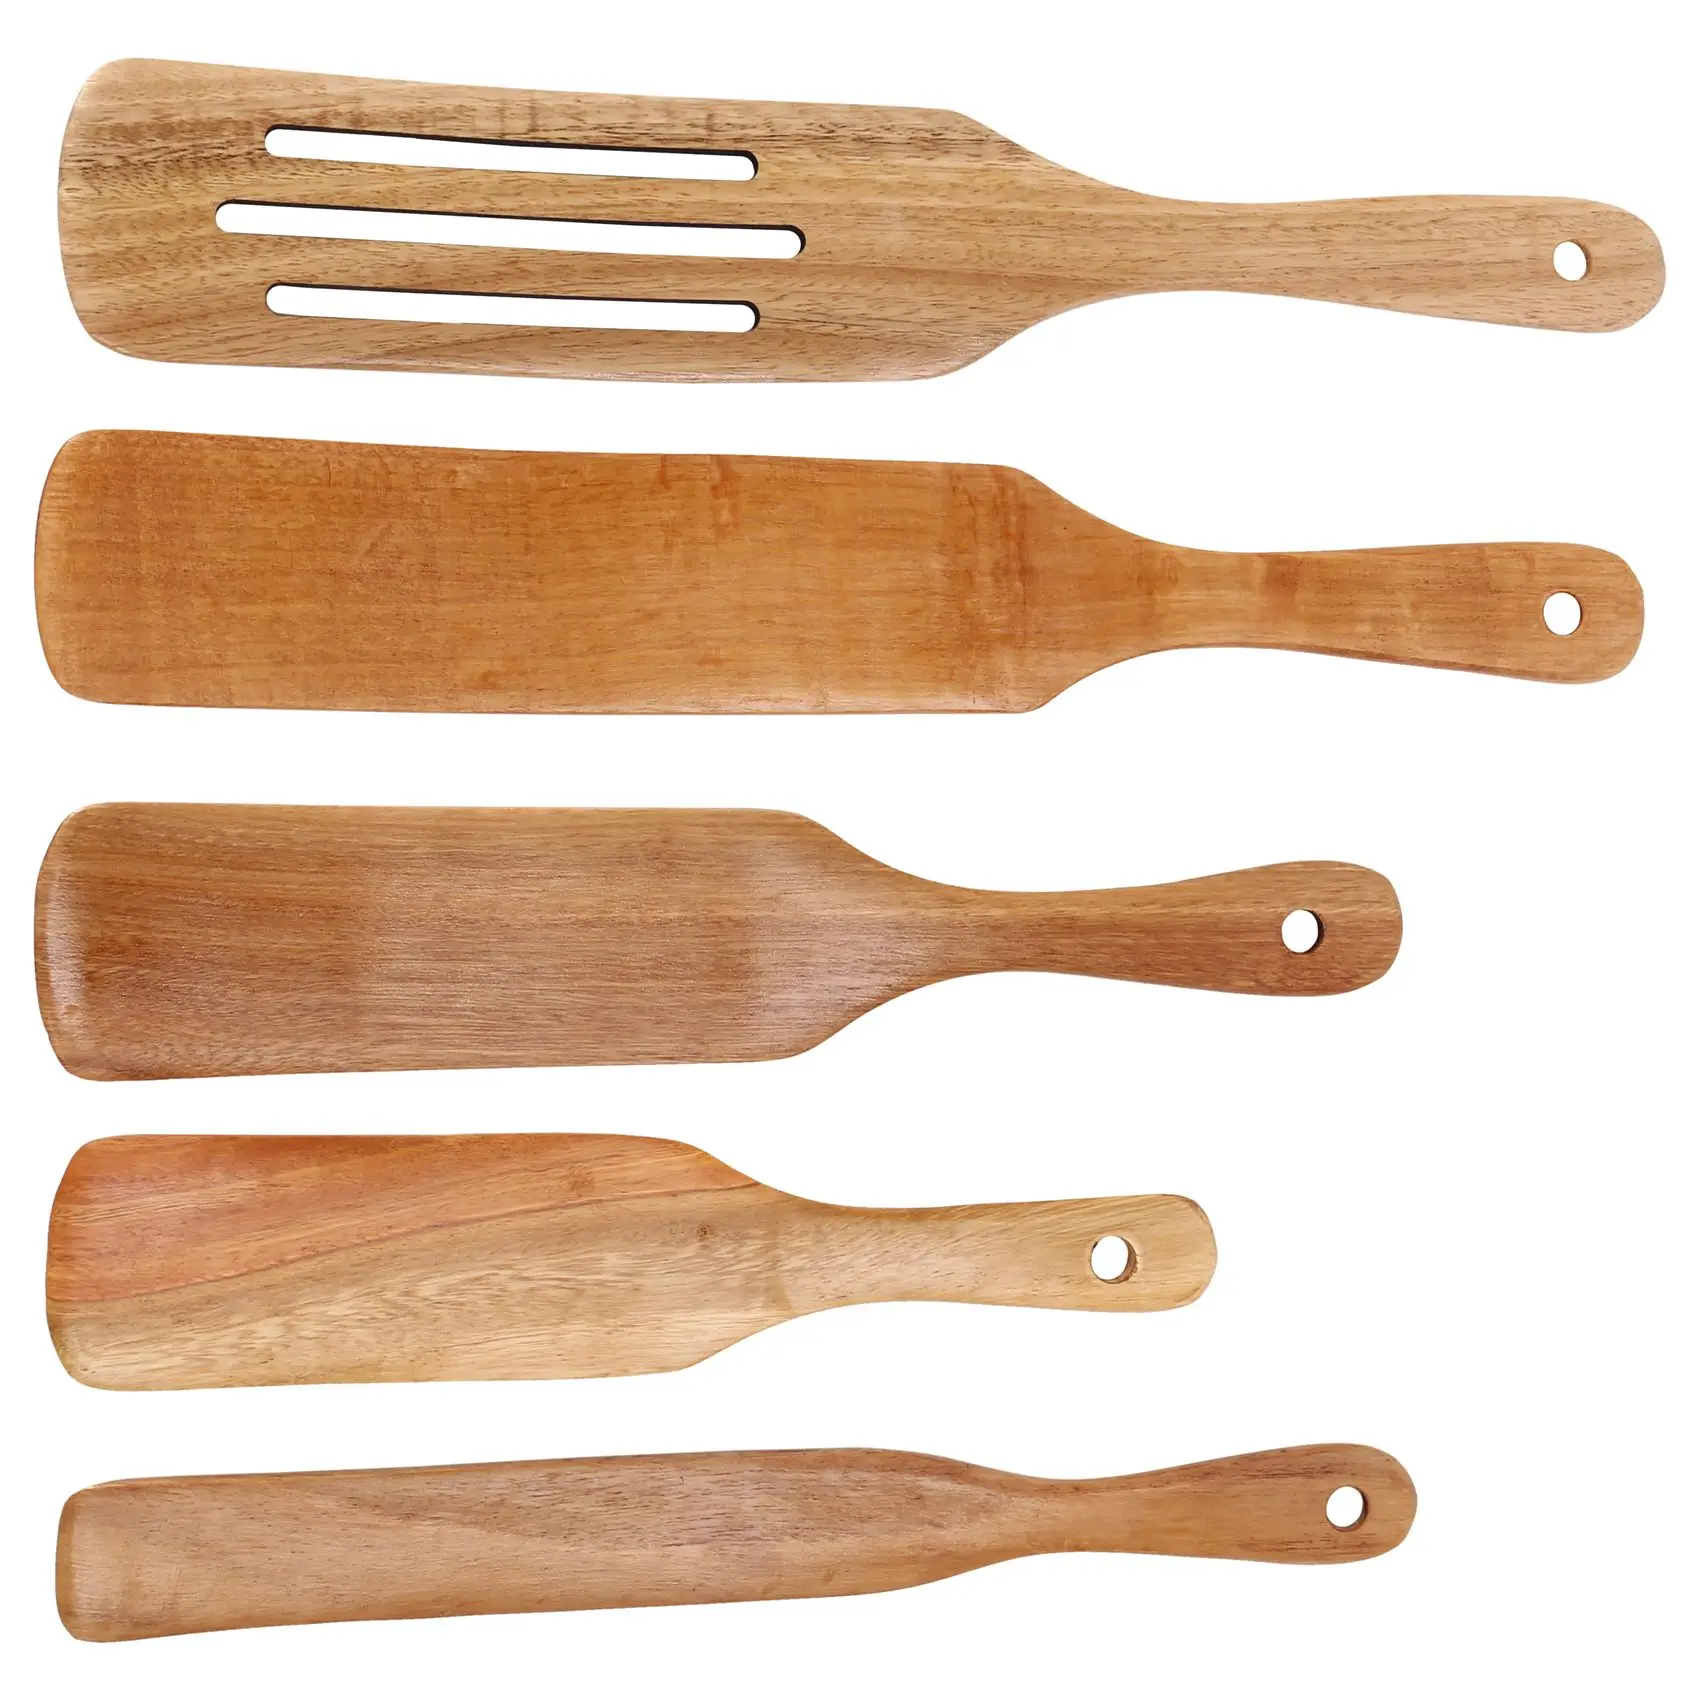 

Wooden Spurtles Set (5Pcs) - Teak Wood Set - Heat Resistant Non Stick Wood Cookware for Stirring & Mixing